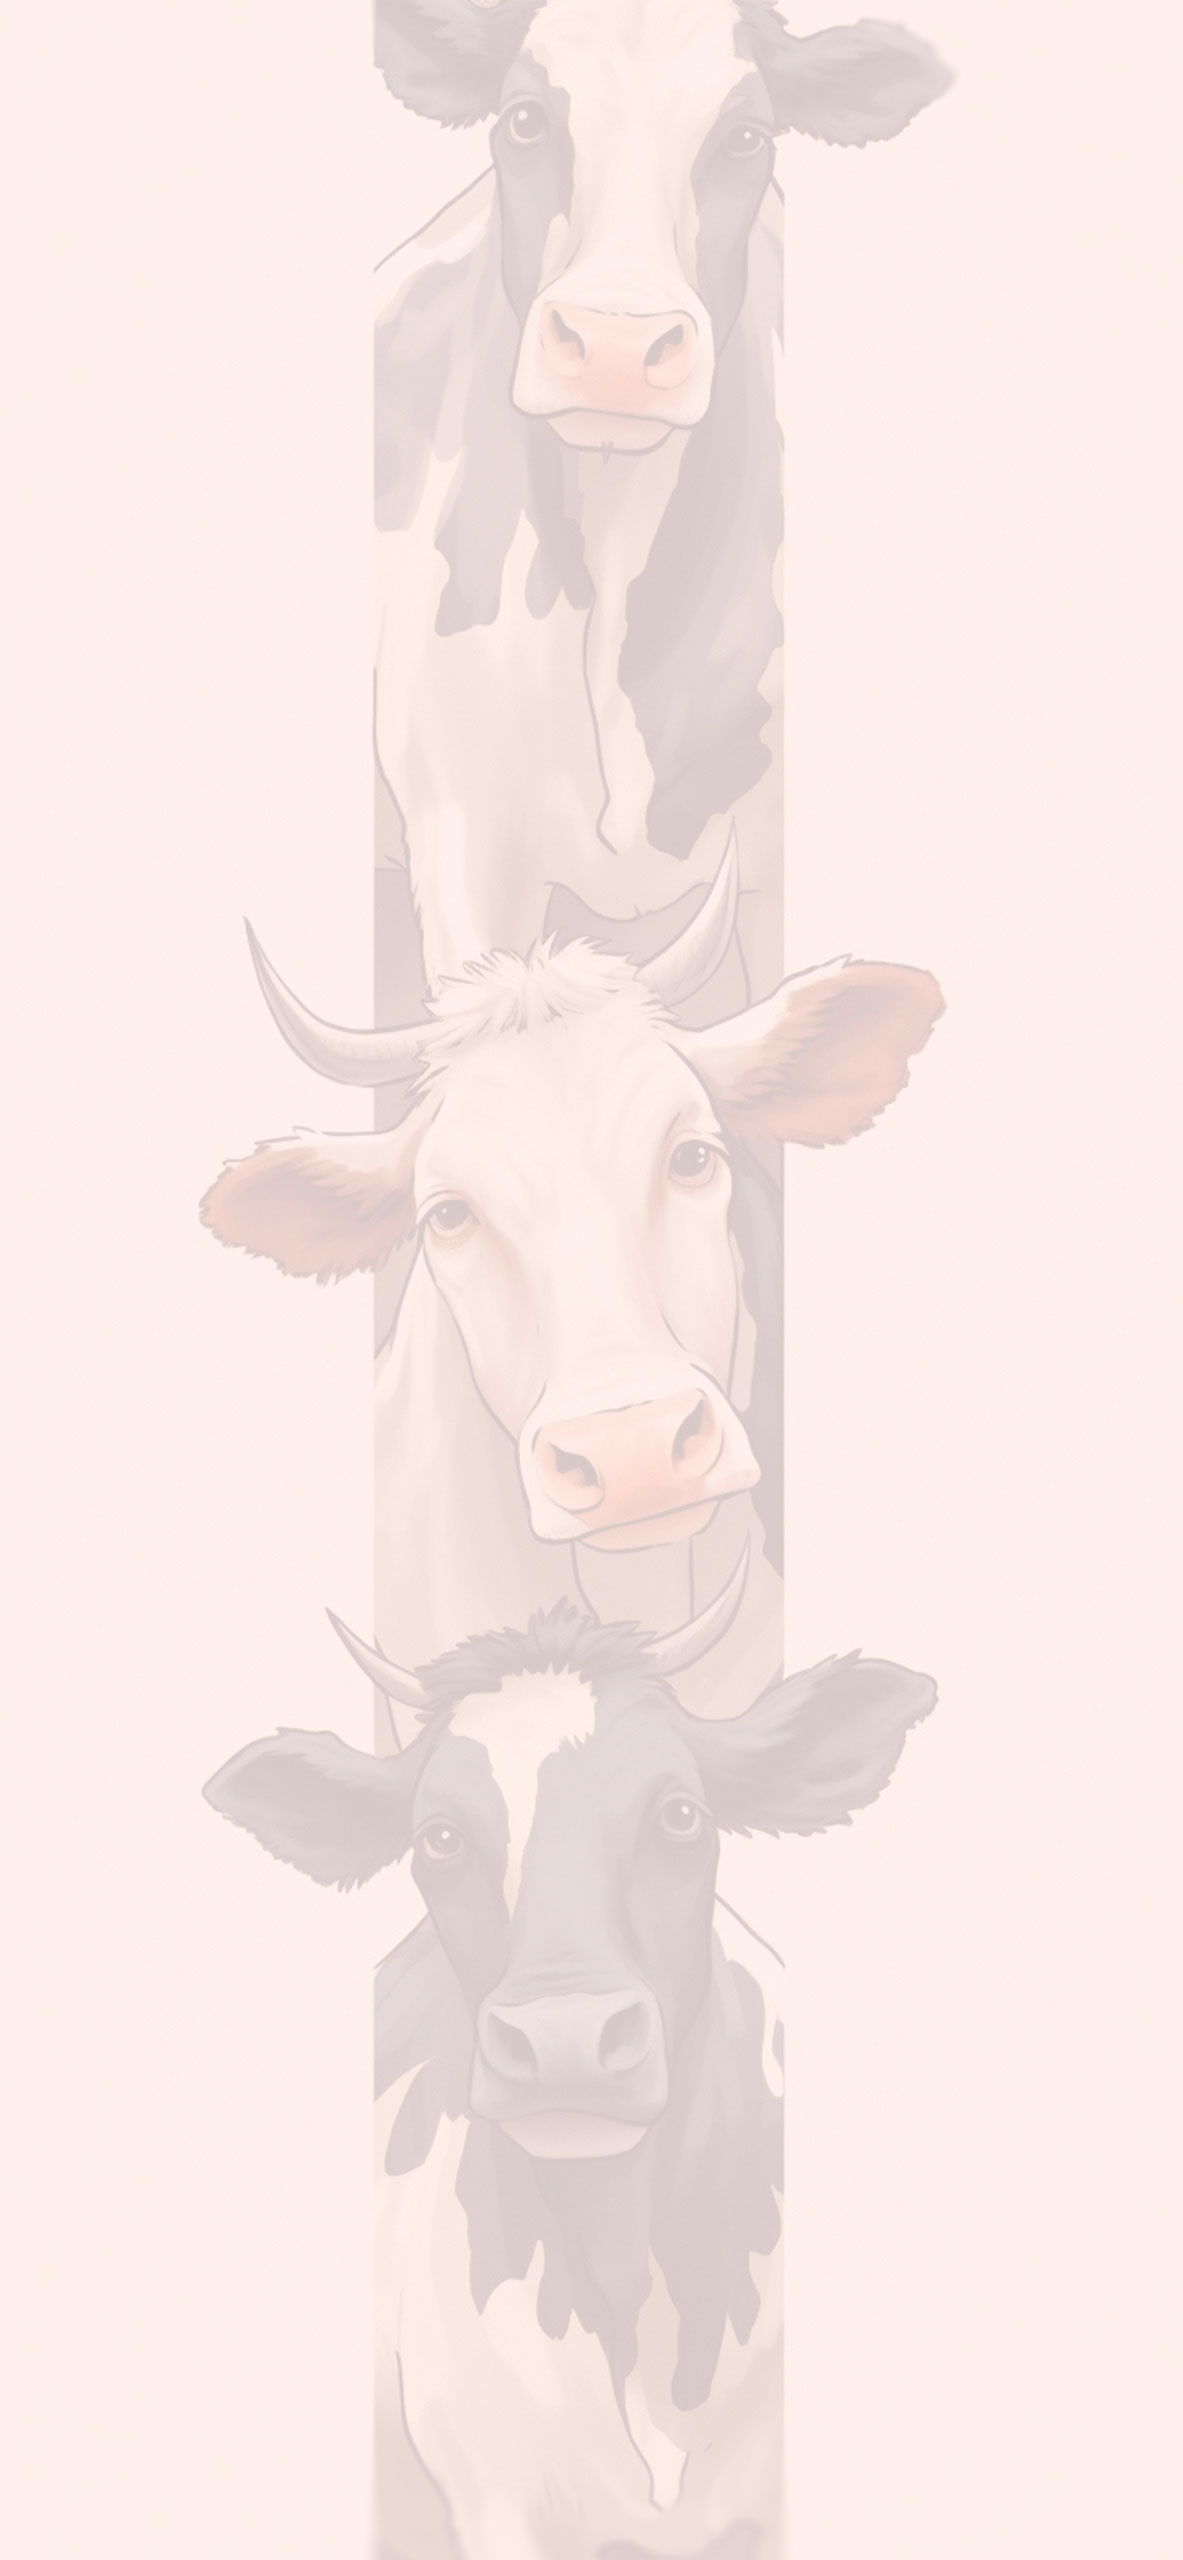 moo wallpaper  Cow print wallpaper Cow wallpaper Animal print wallpaper